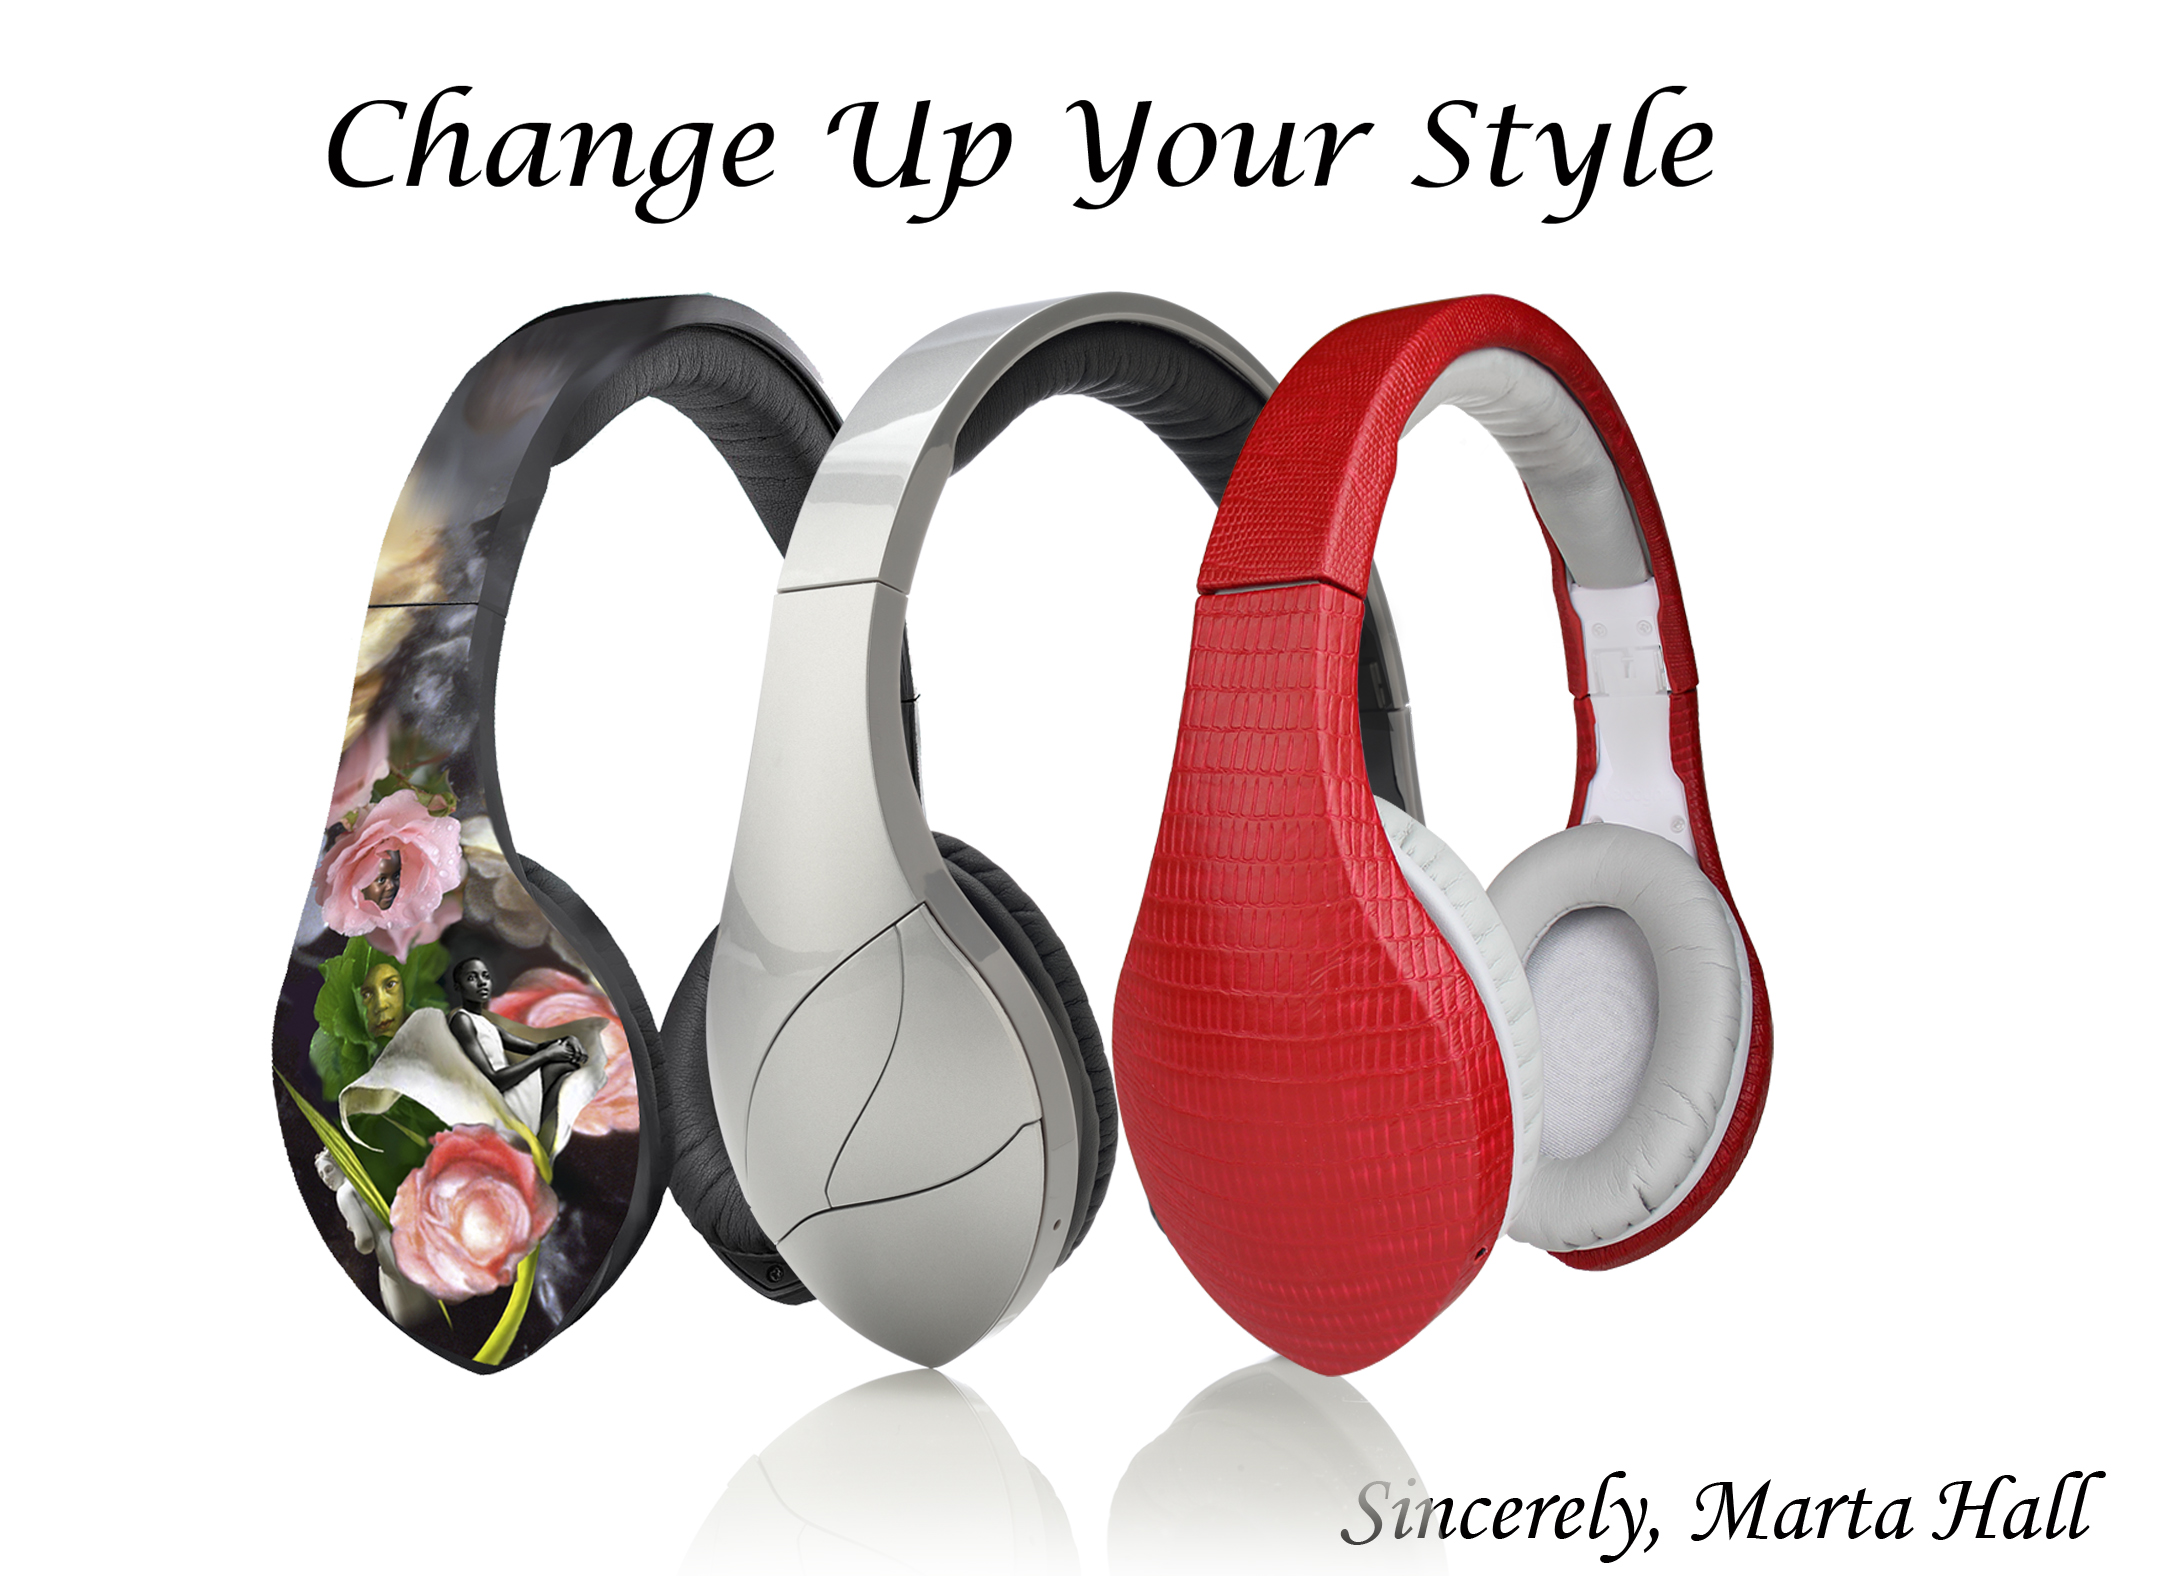 Velodyne headphone skins -- fashion-forward earware for the audio-aware